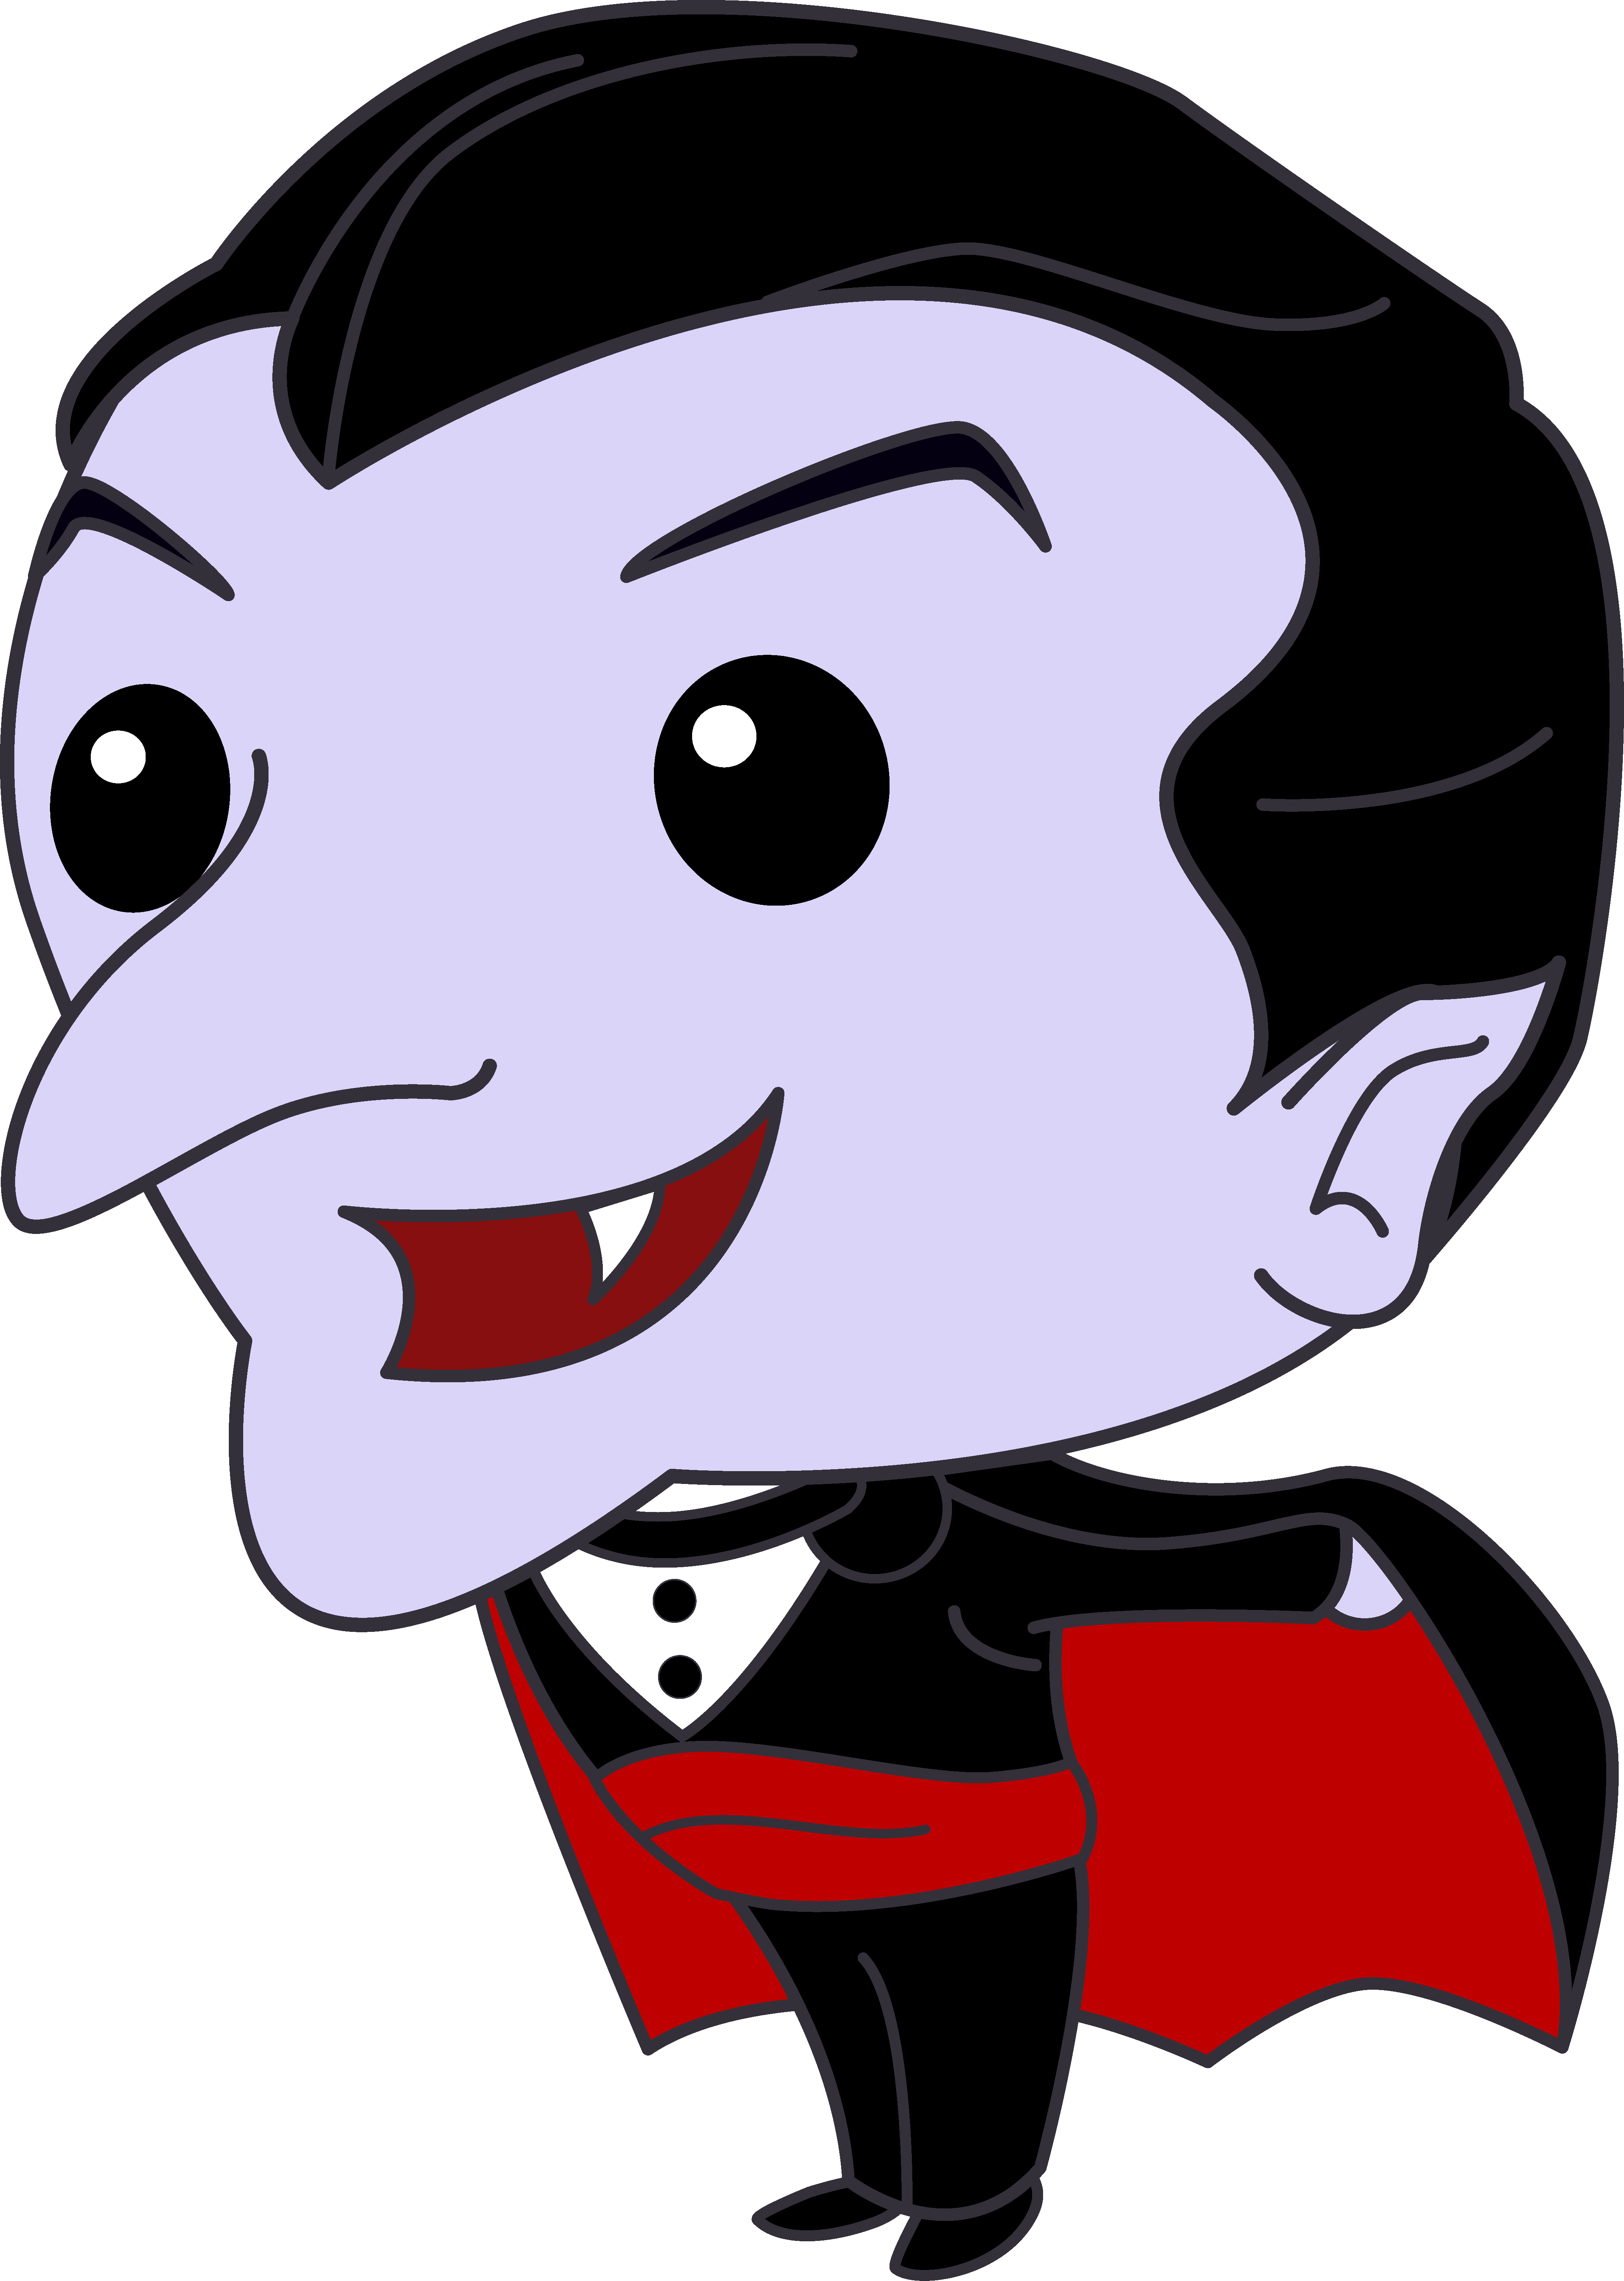 Free Vampire Cartoon Images, Download Free Clip Art, Free.